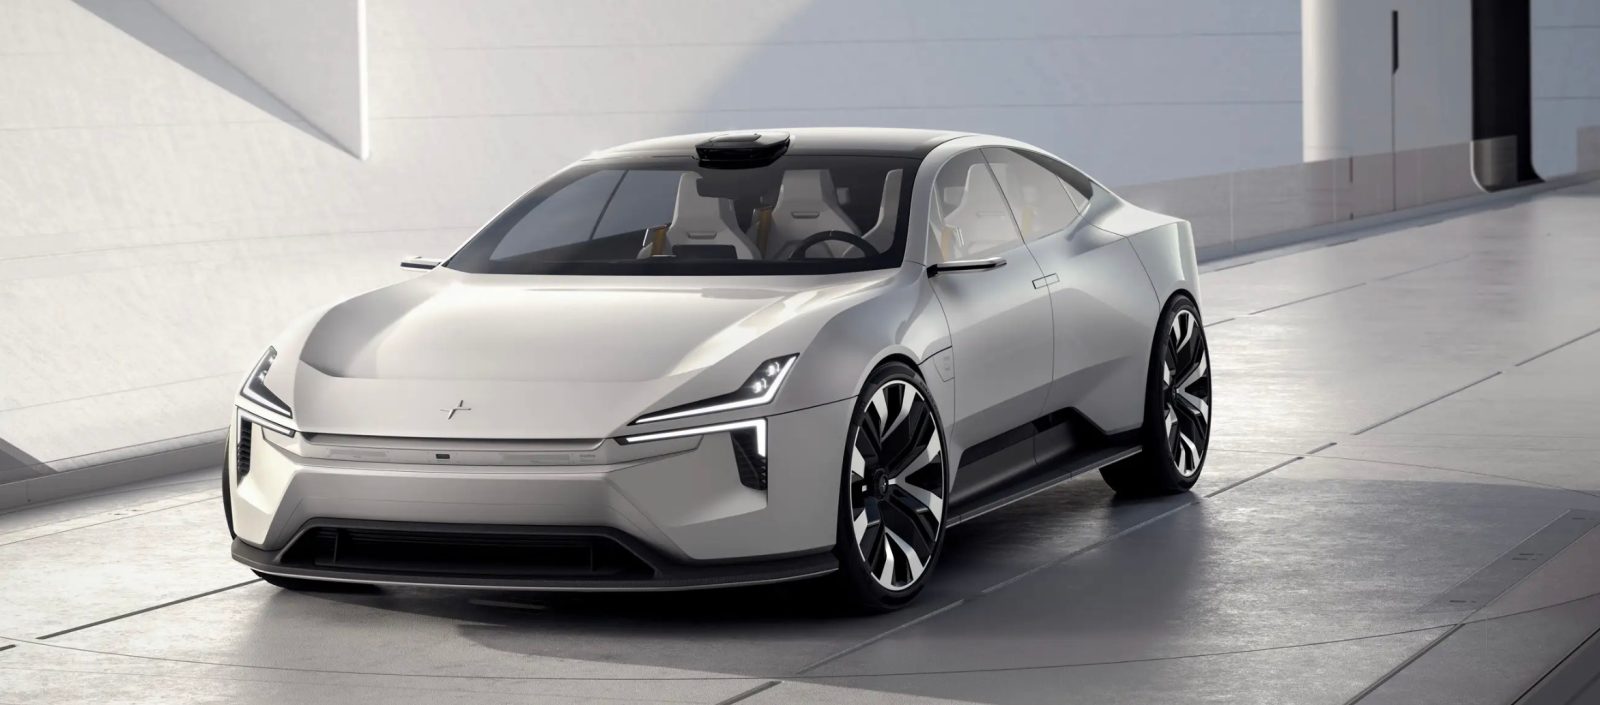 Polestar releases pictures of new electric sedan concept Electrek